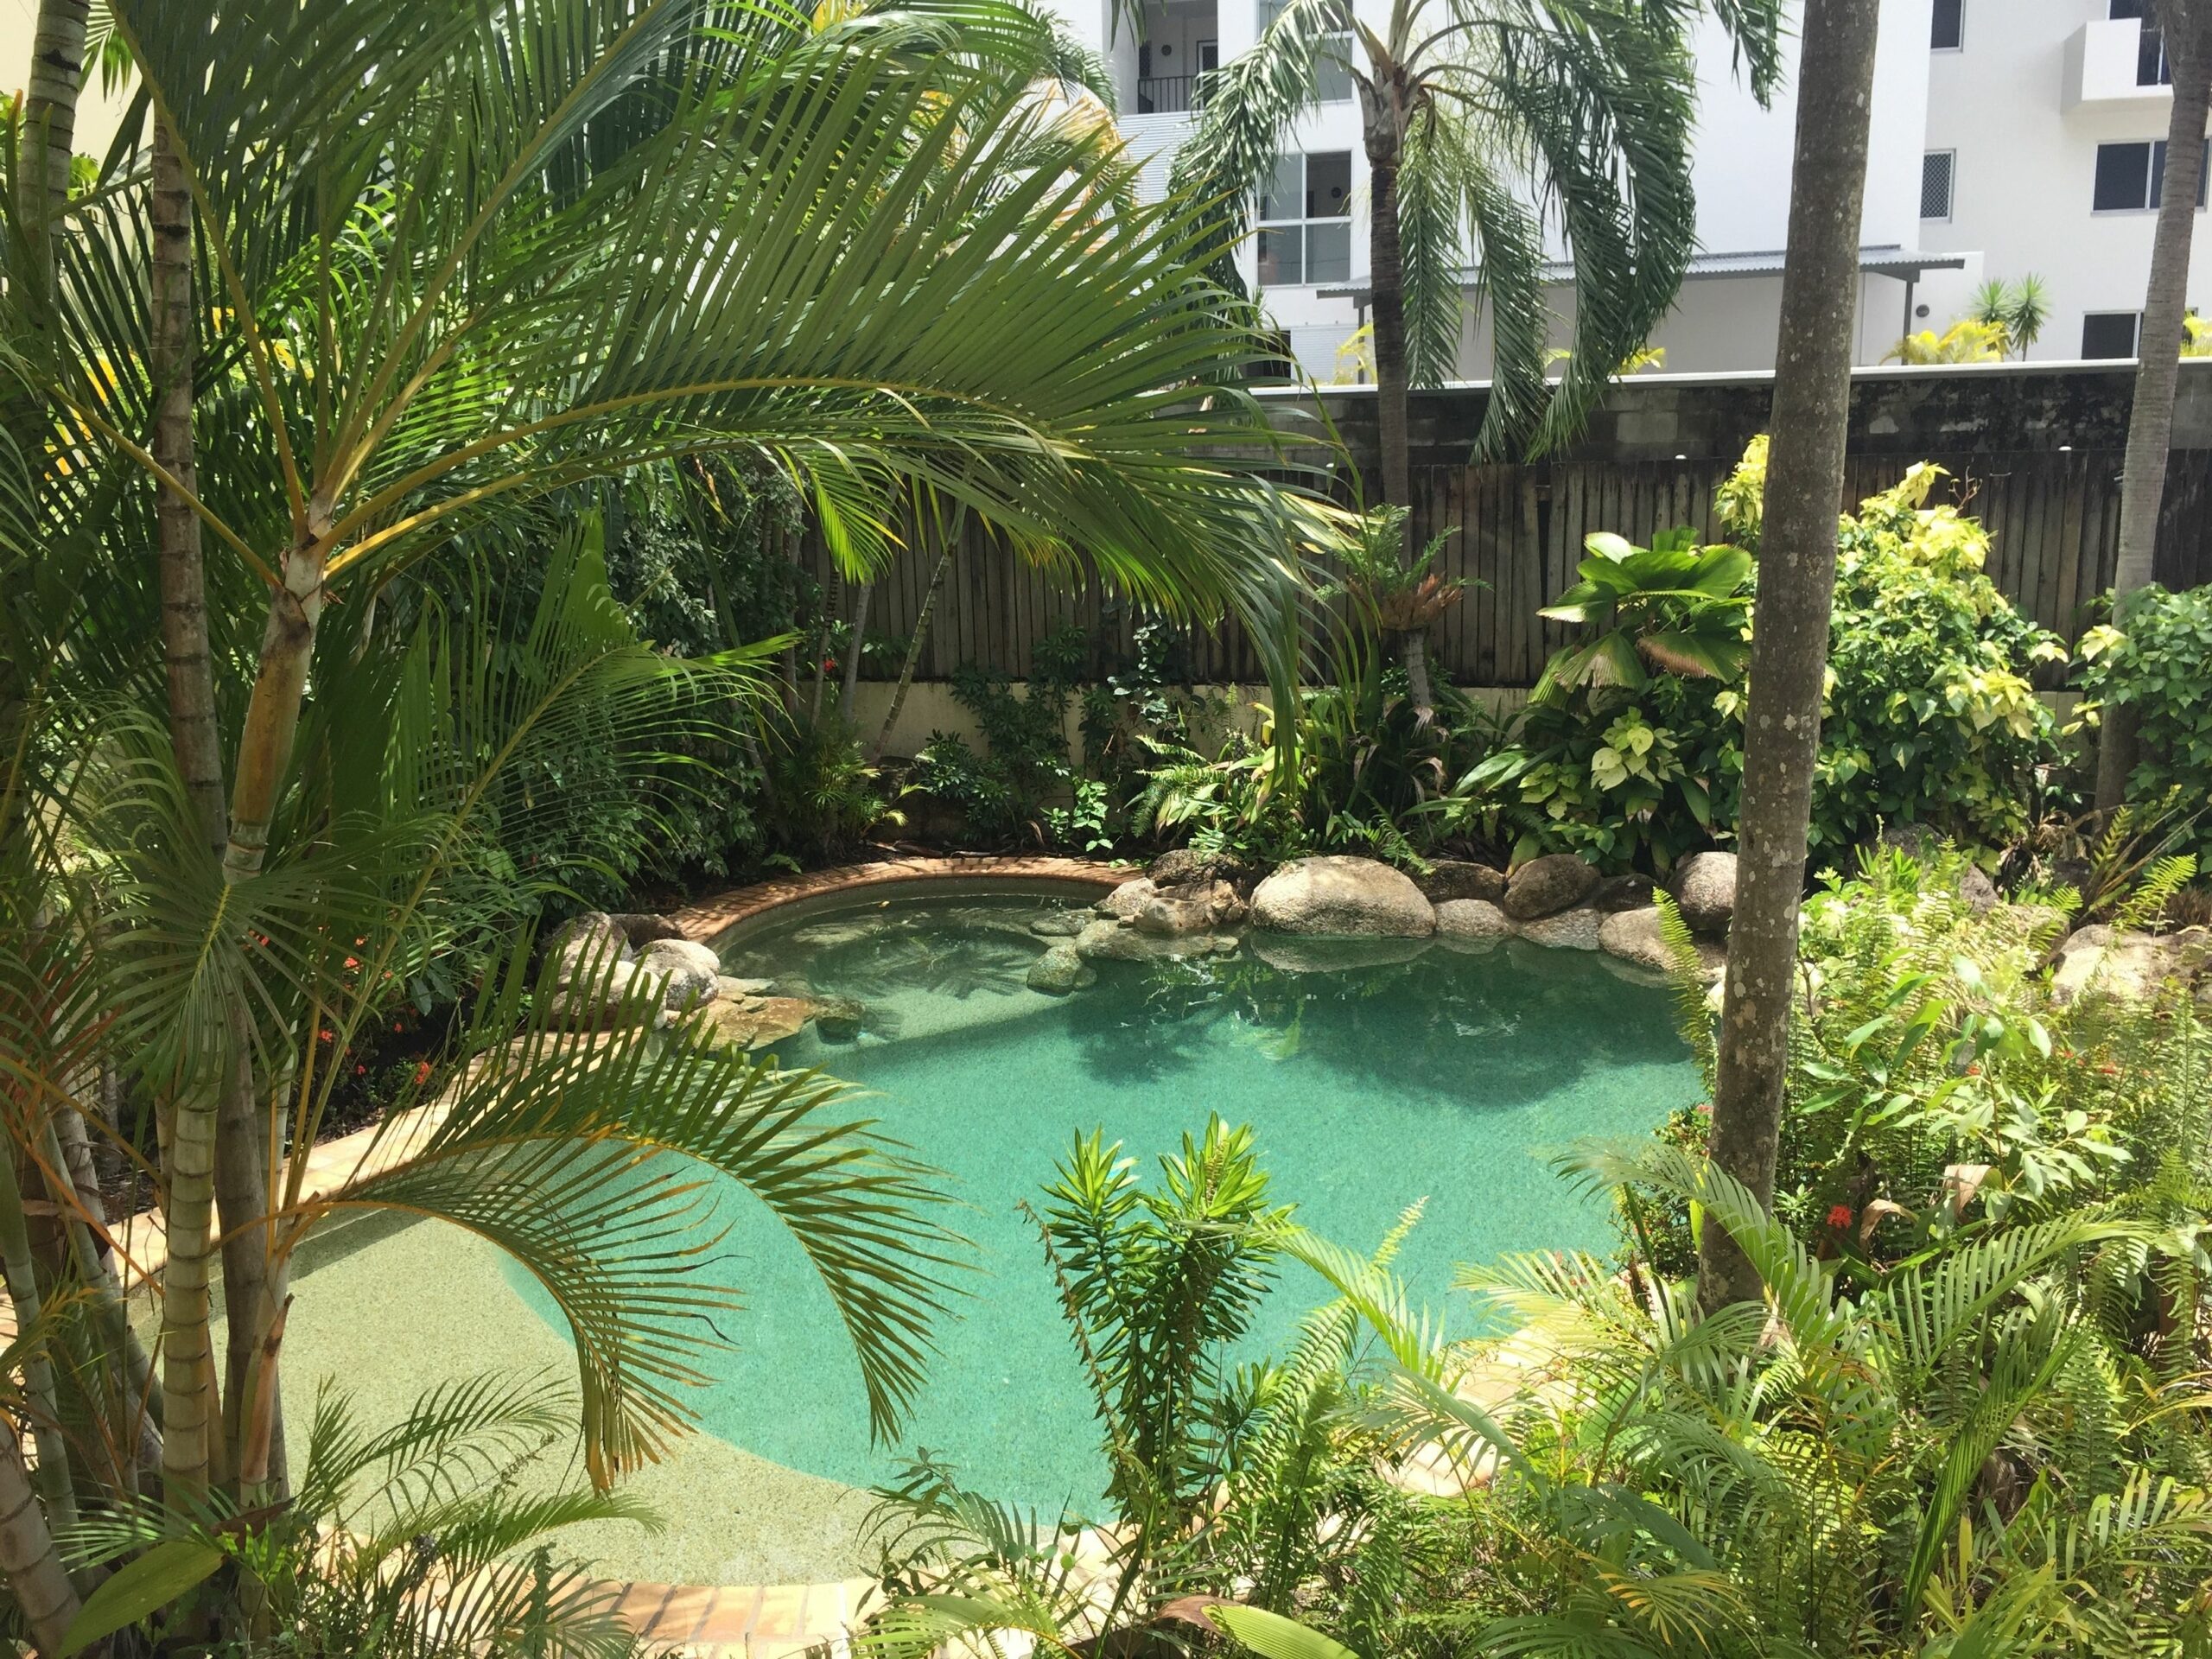 Villa Vaucluse Apartments of Cairns